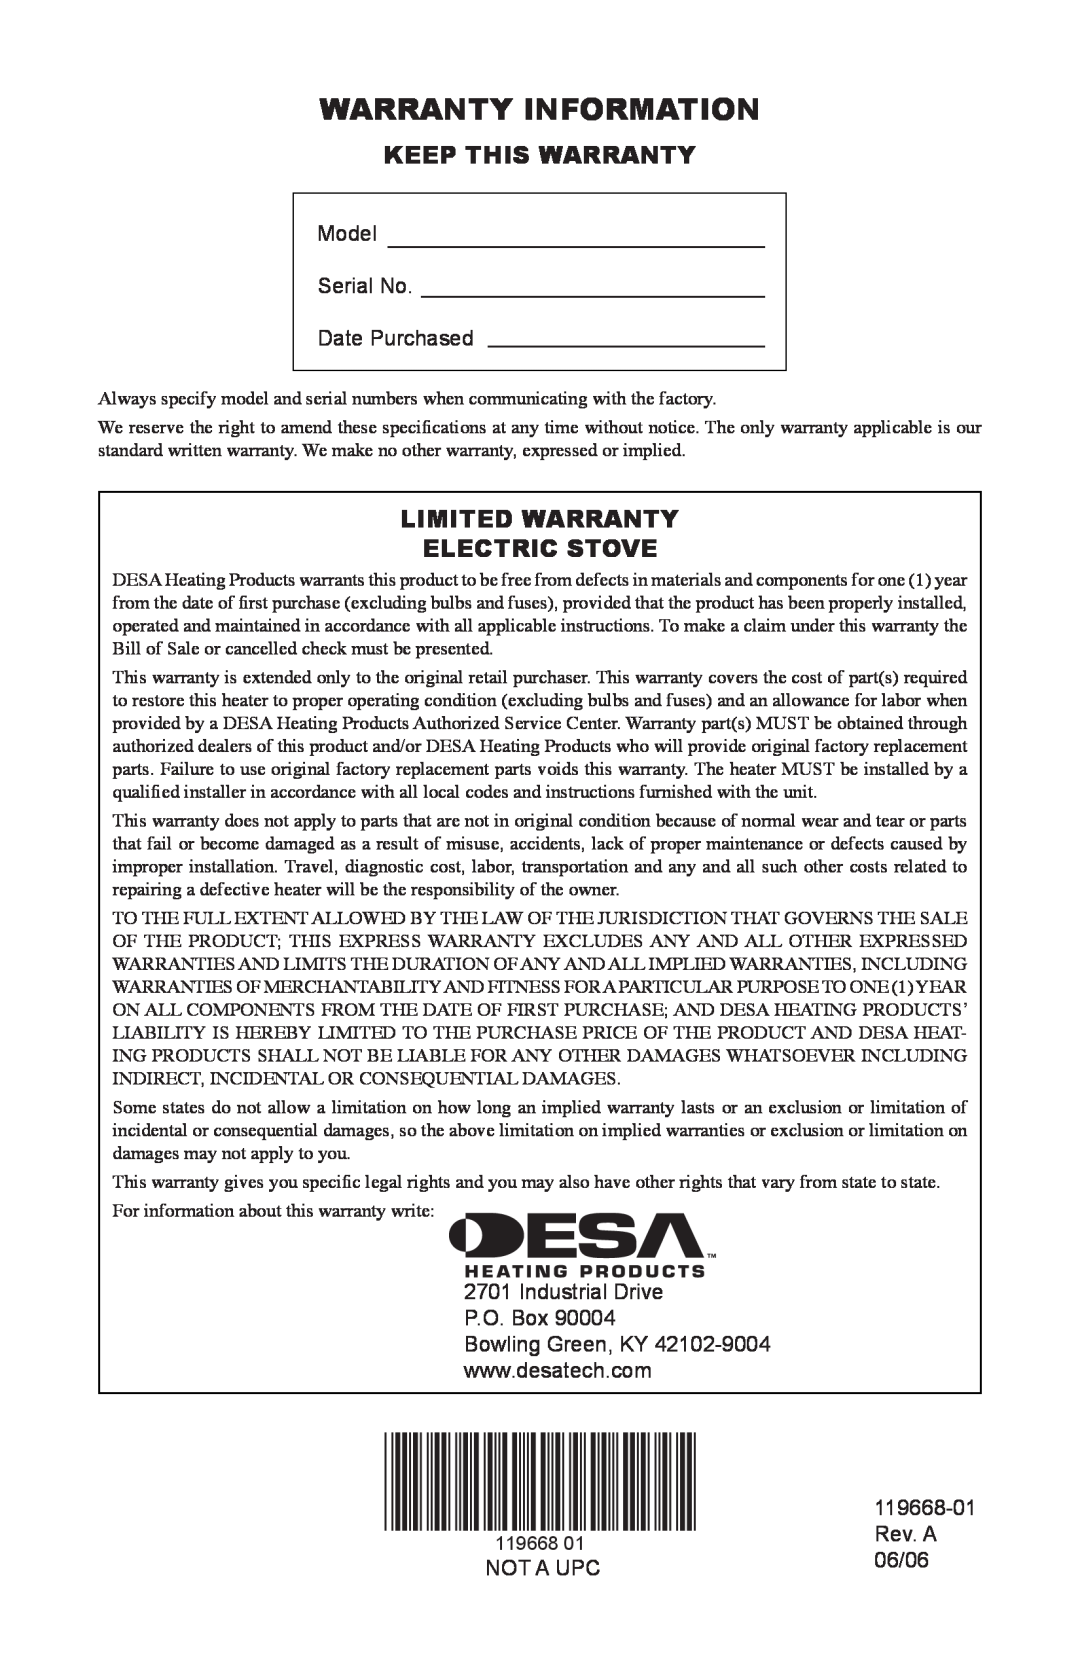 Desa VESBMRA, CGESBMRA operation manual Warranty Information, Keep This Warranty, Limited Warranty Electric Stove 